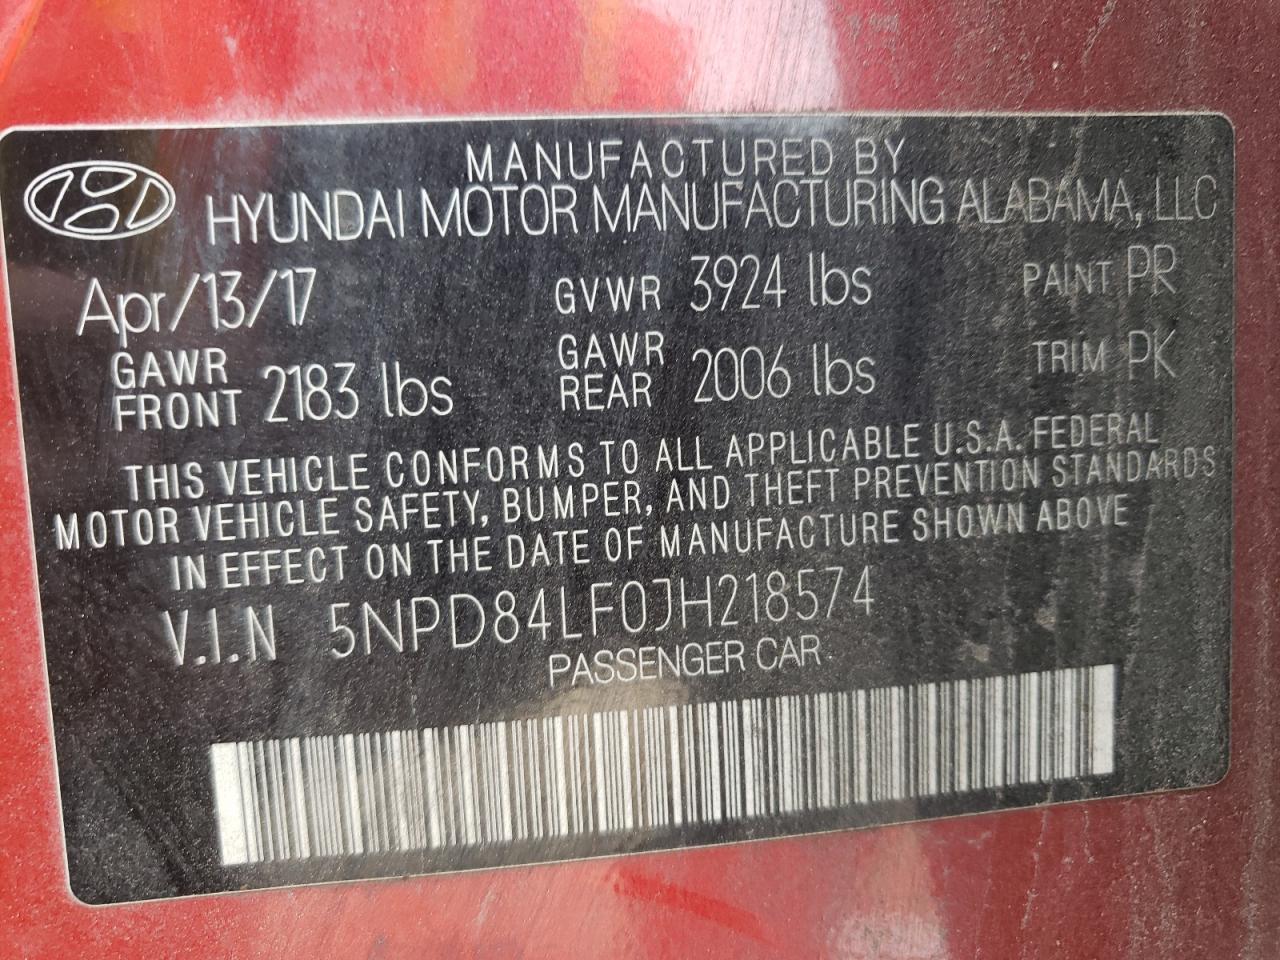 2018 Hyundai Elantra Se 2.0L(VIN: 5NPD84LF0JH218574